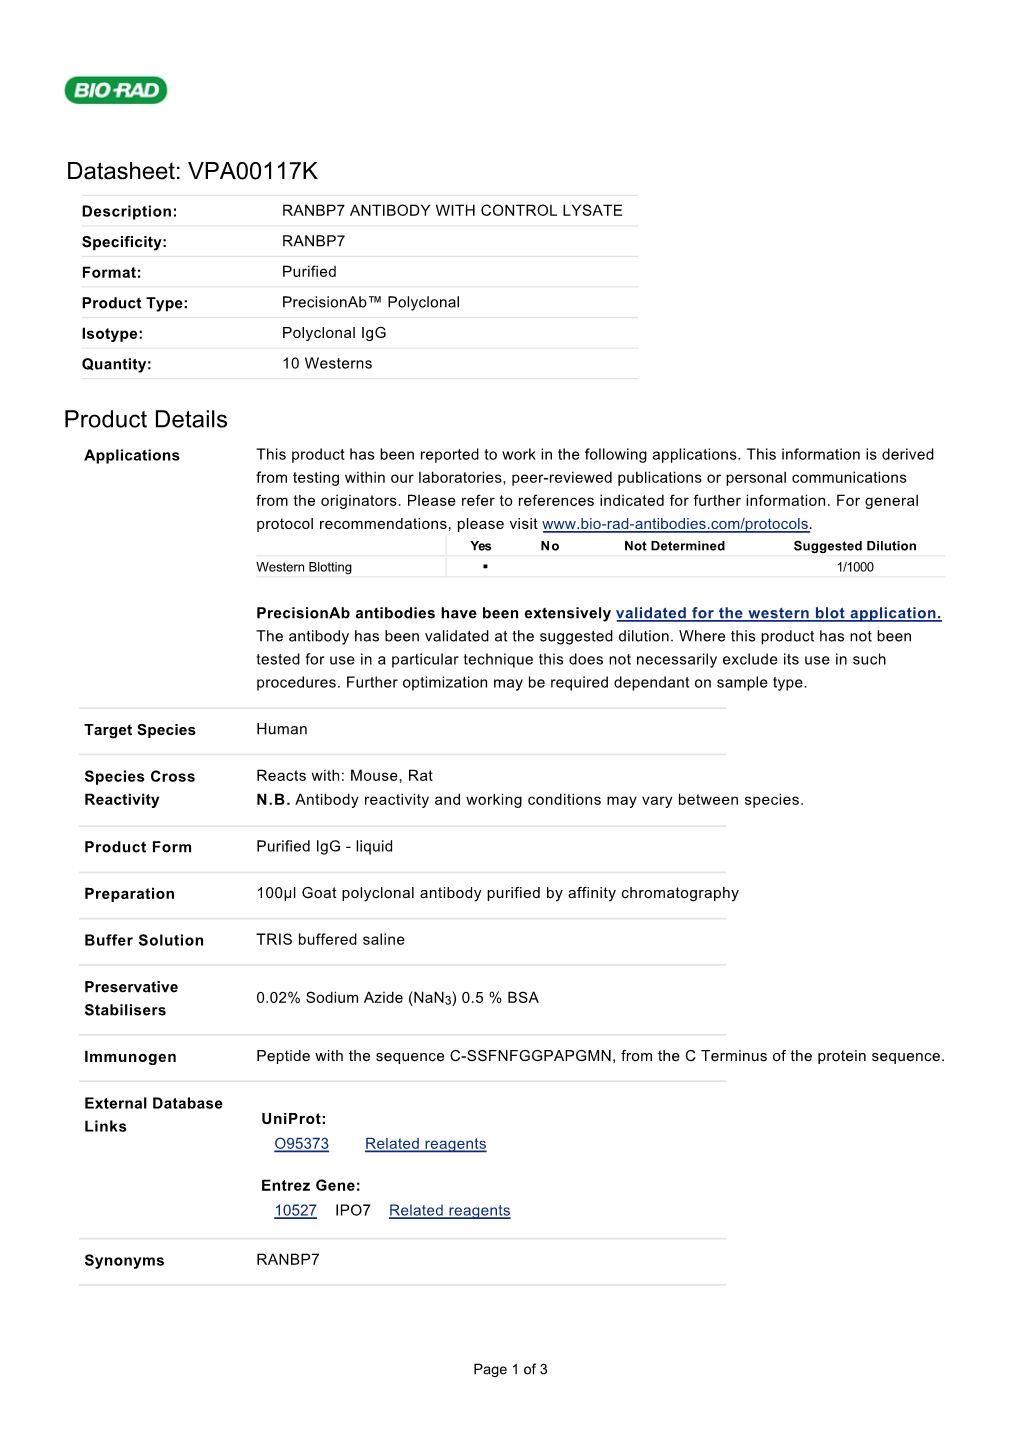 Datasheet: VPA00117K Product Details